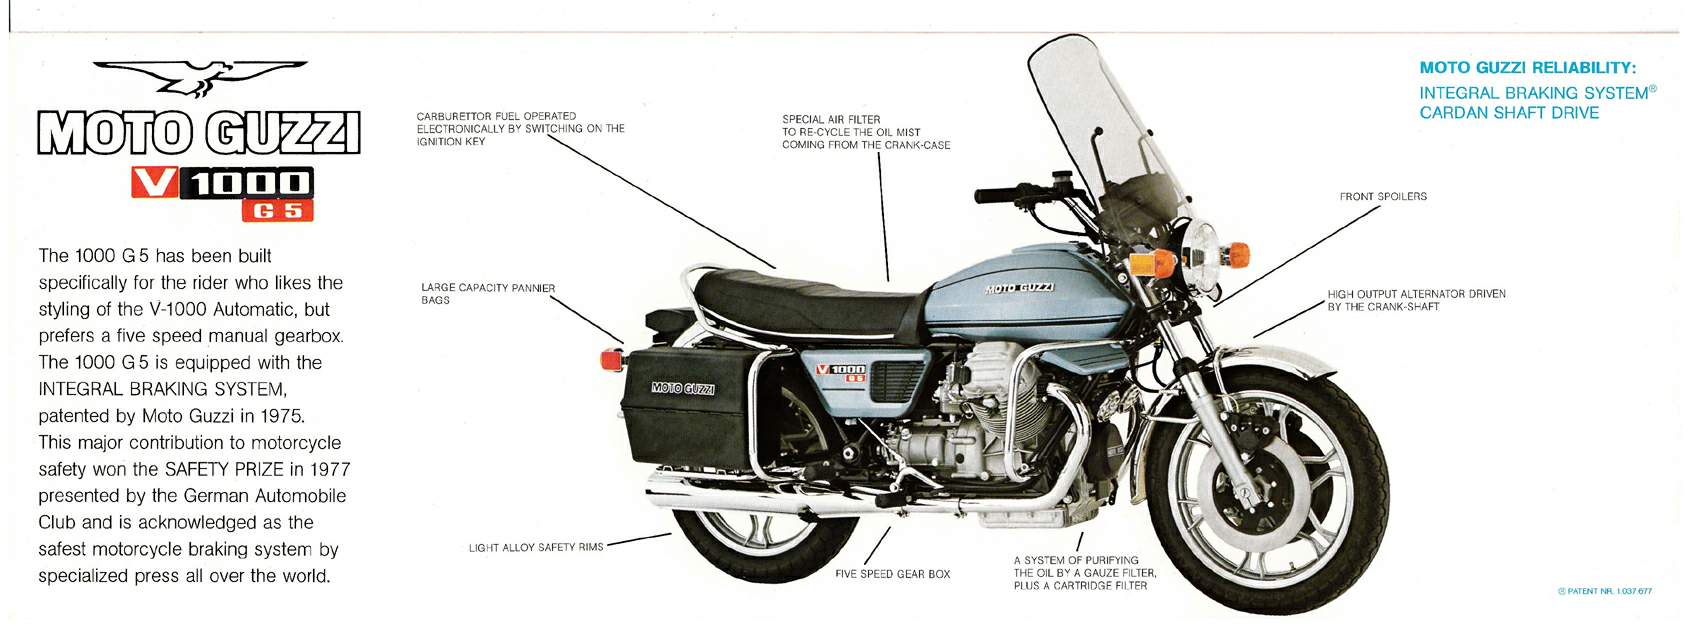 Moto Guzzi V 1000G5 (1978-80) especificaciones técnicas